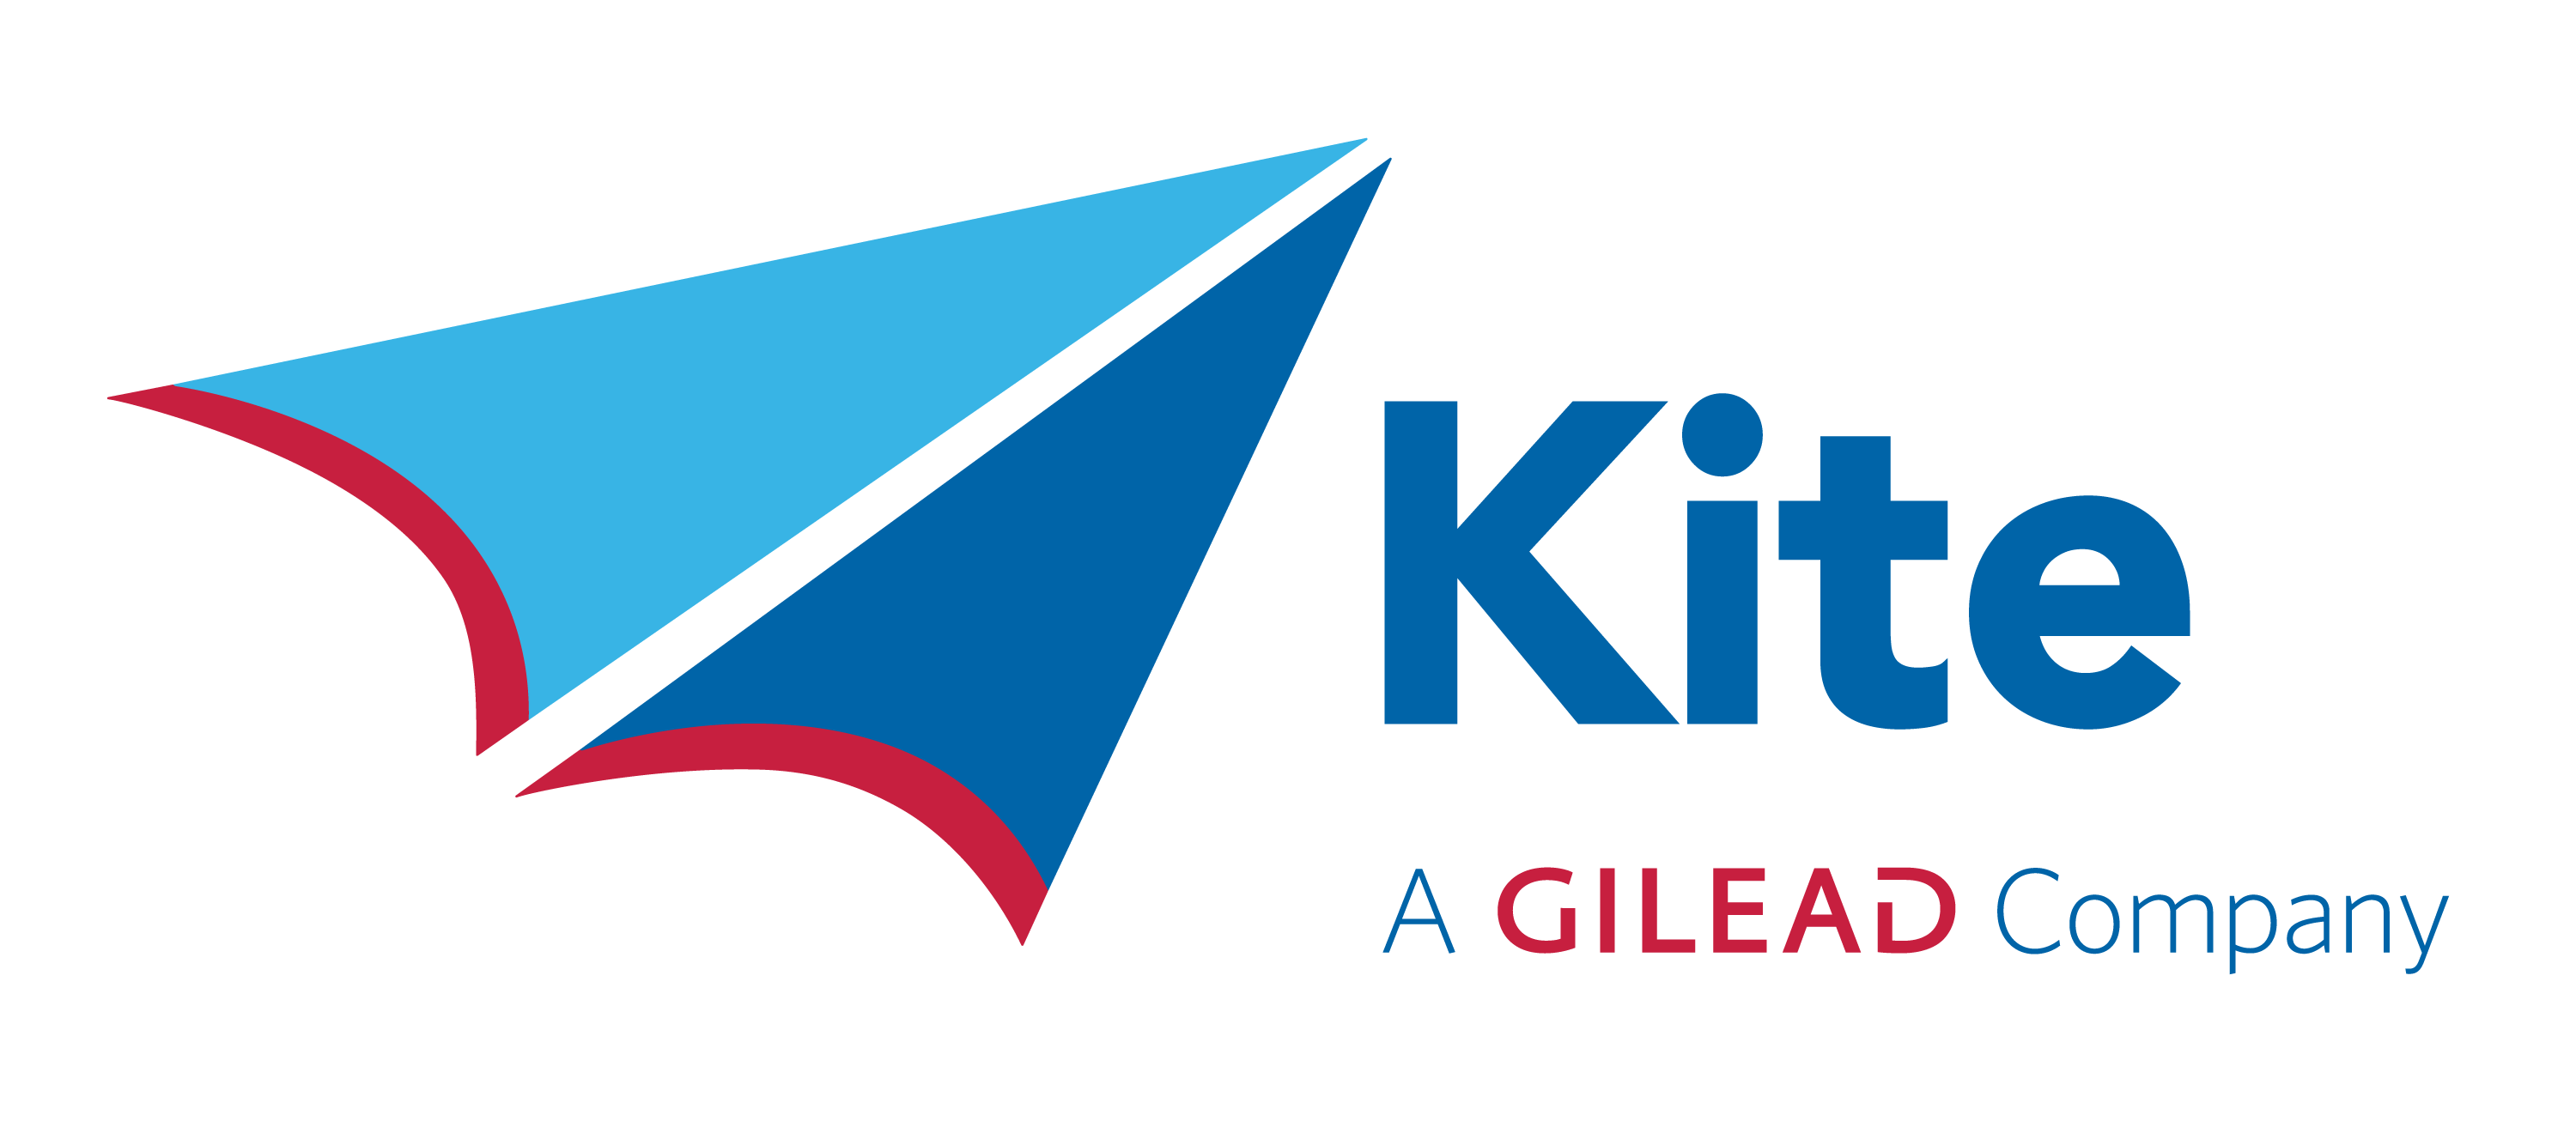 Kite - a Gilead Company Logo (small)